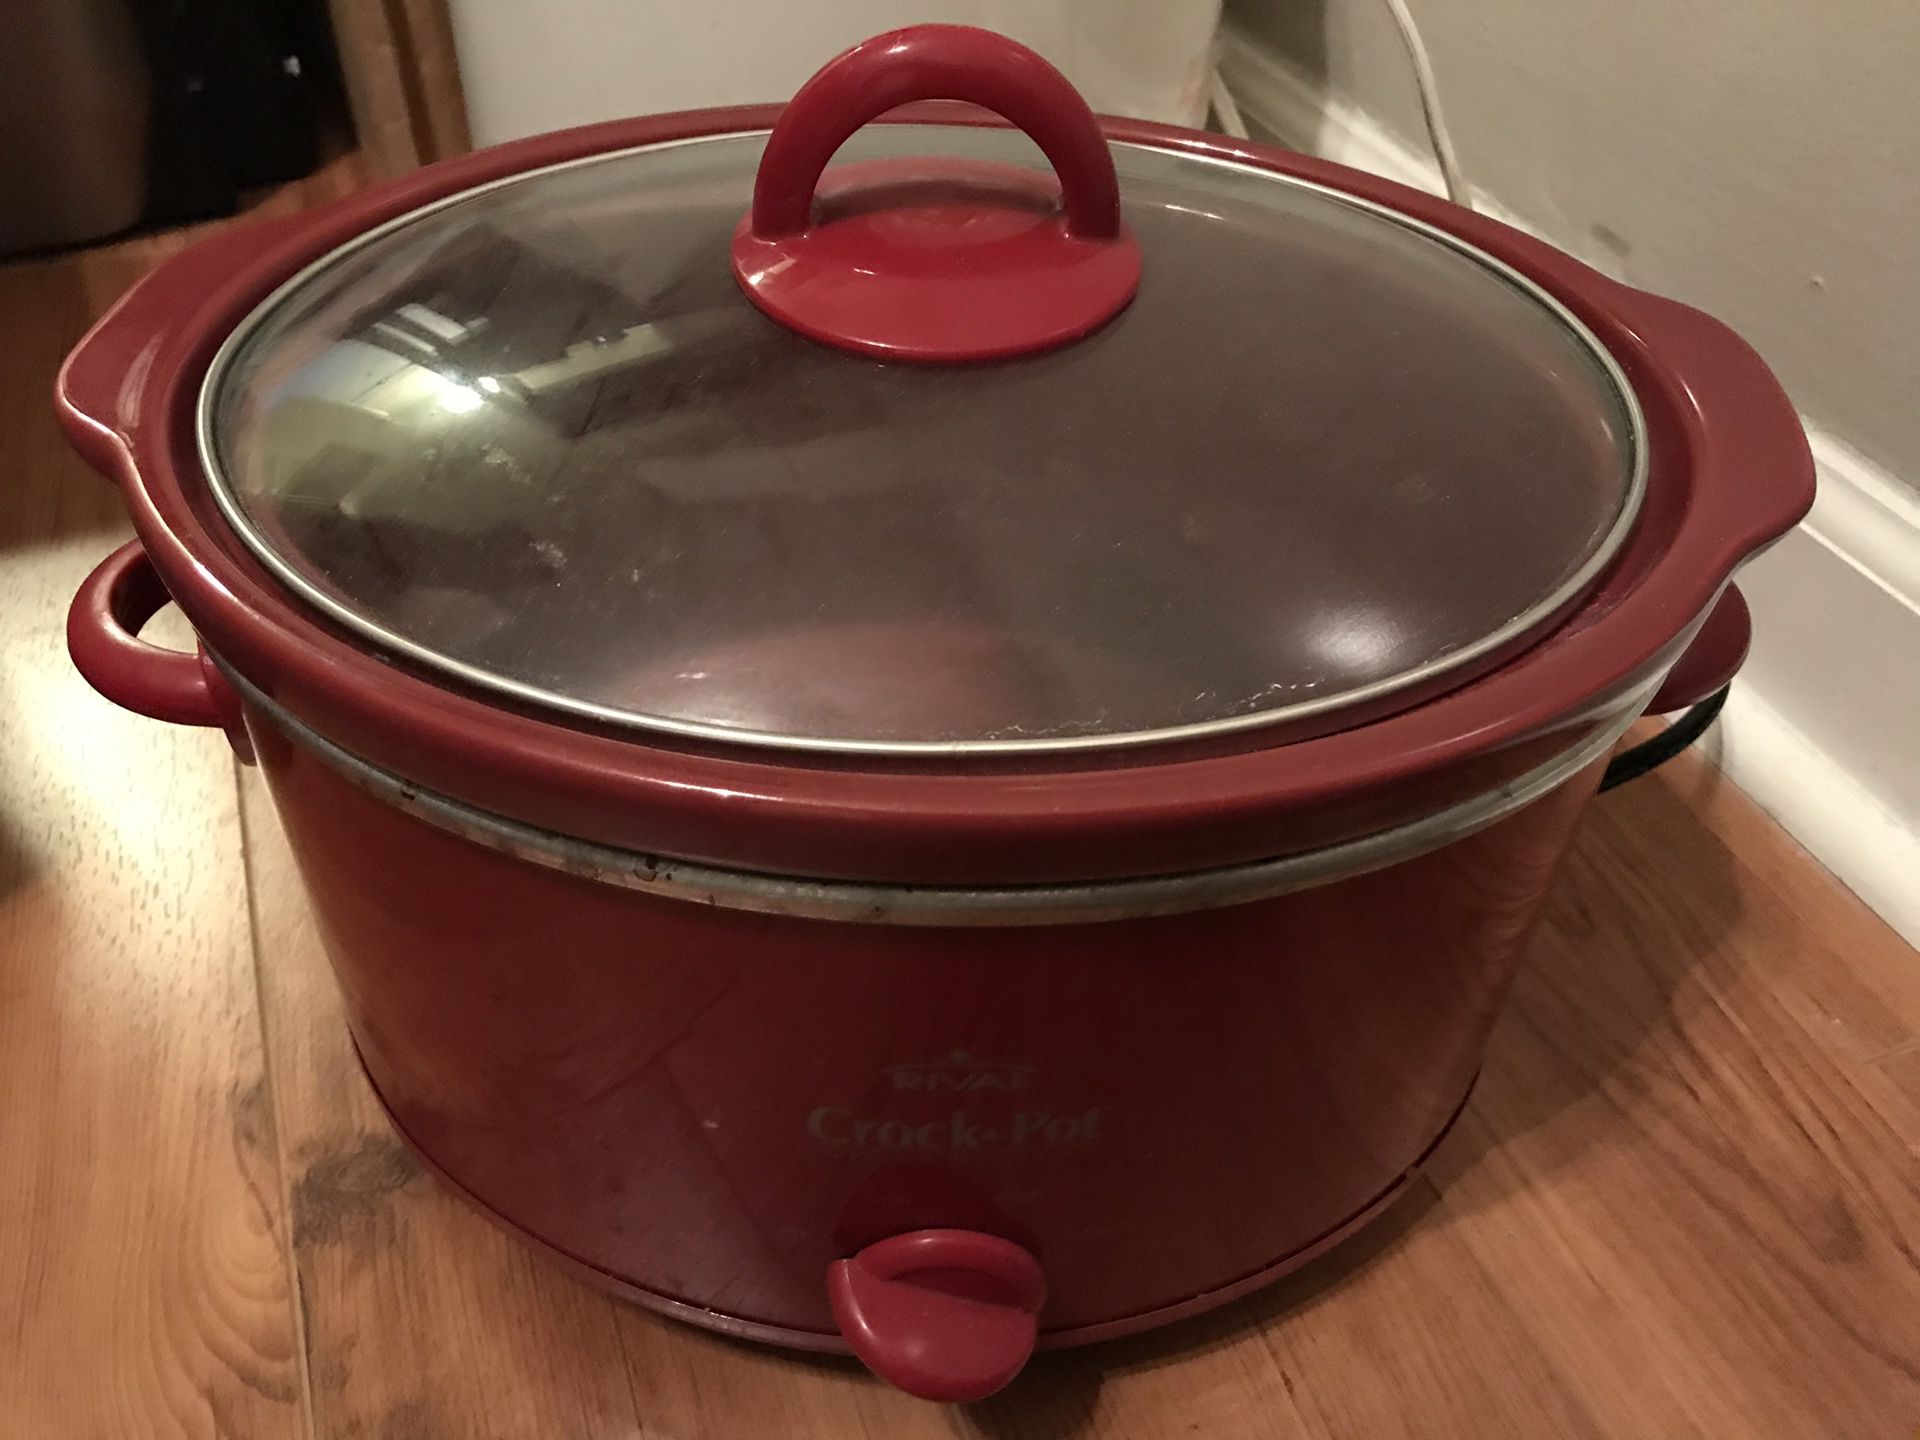 Slow cooker crock pot